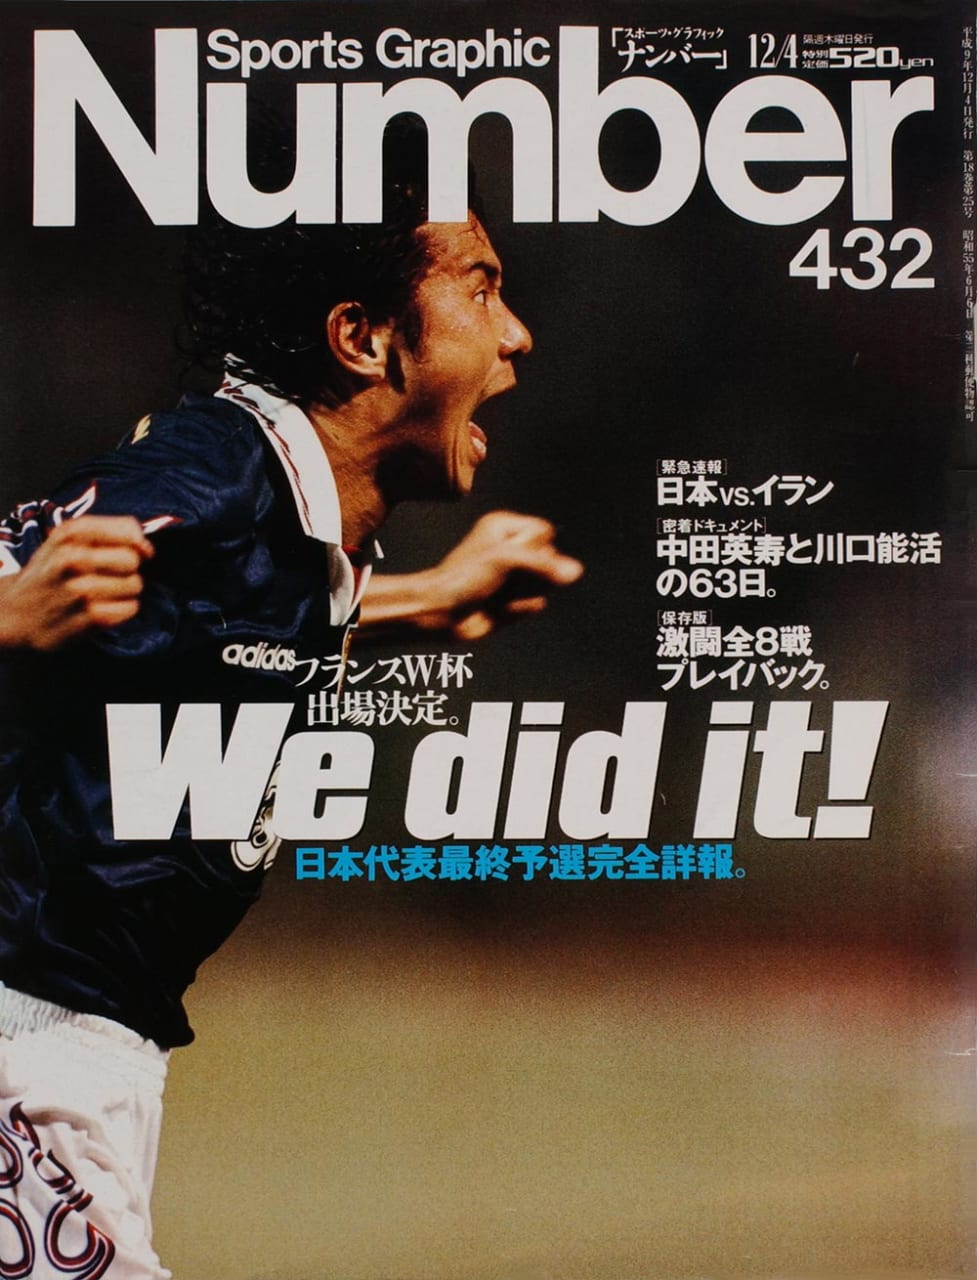 Sports Graphic Number 432号
1997年11月20日発売
表紙撮影：西山和明